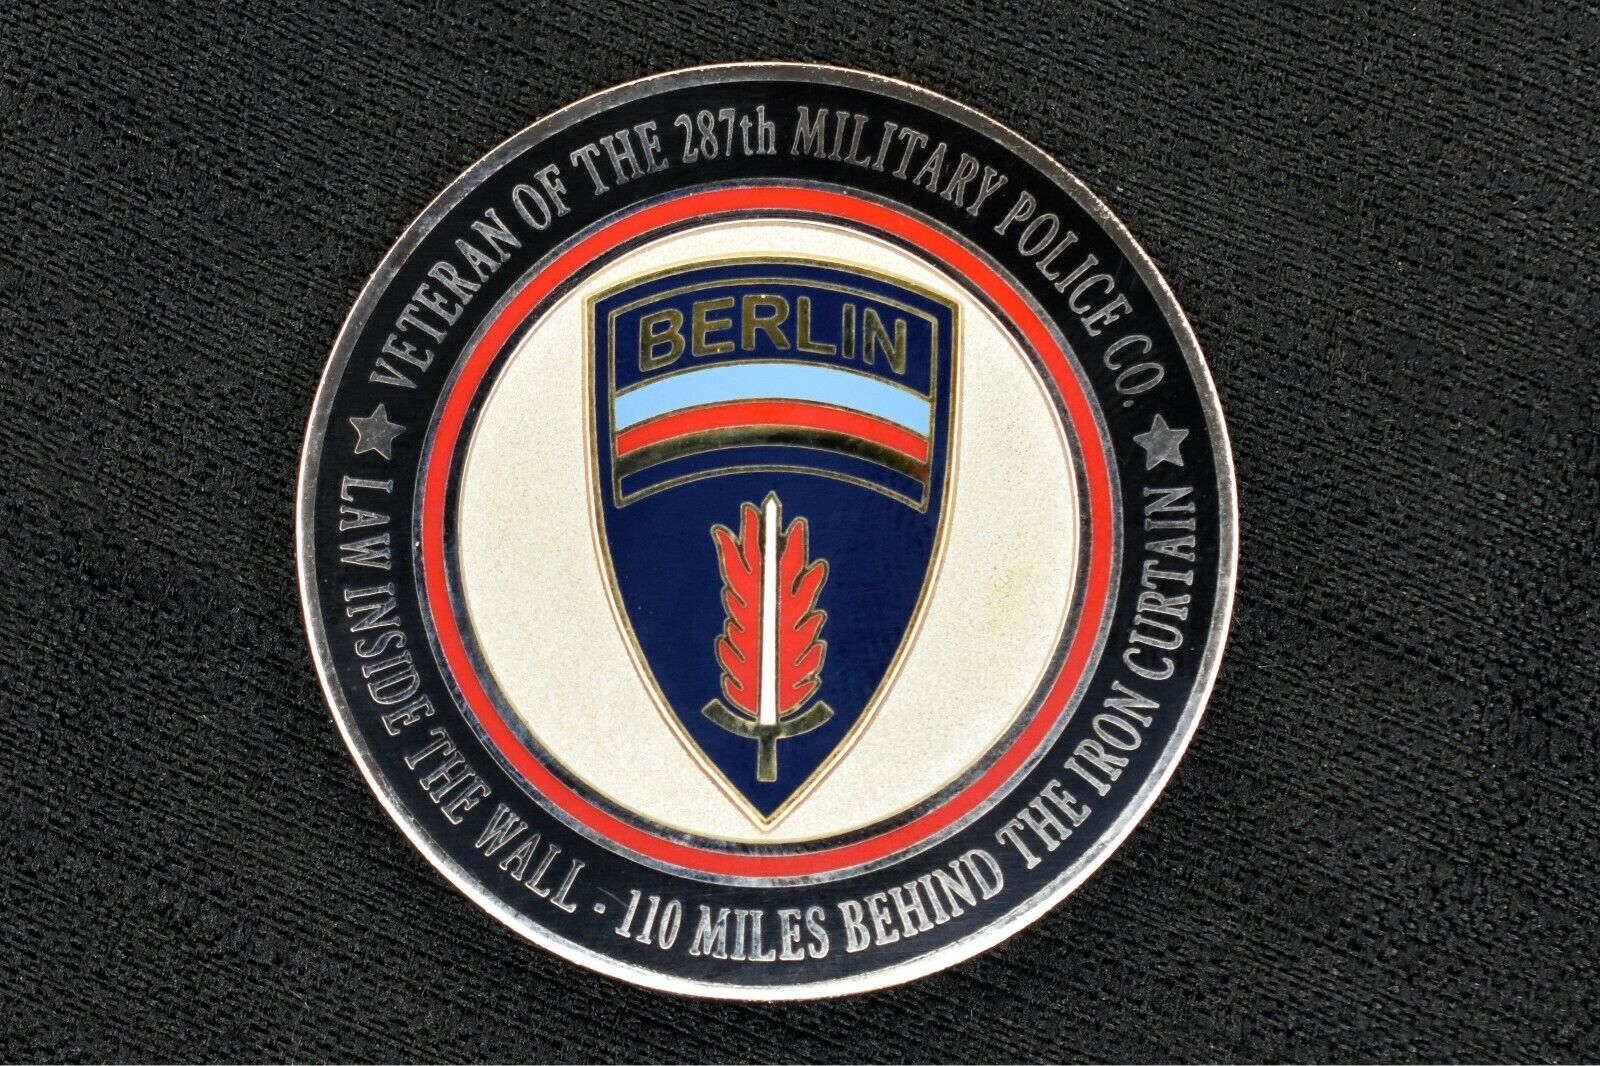 U.S Army Berlin Brigade Challenge Coin, Checkpoint Charlie